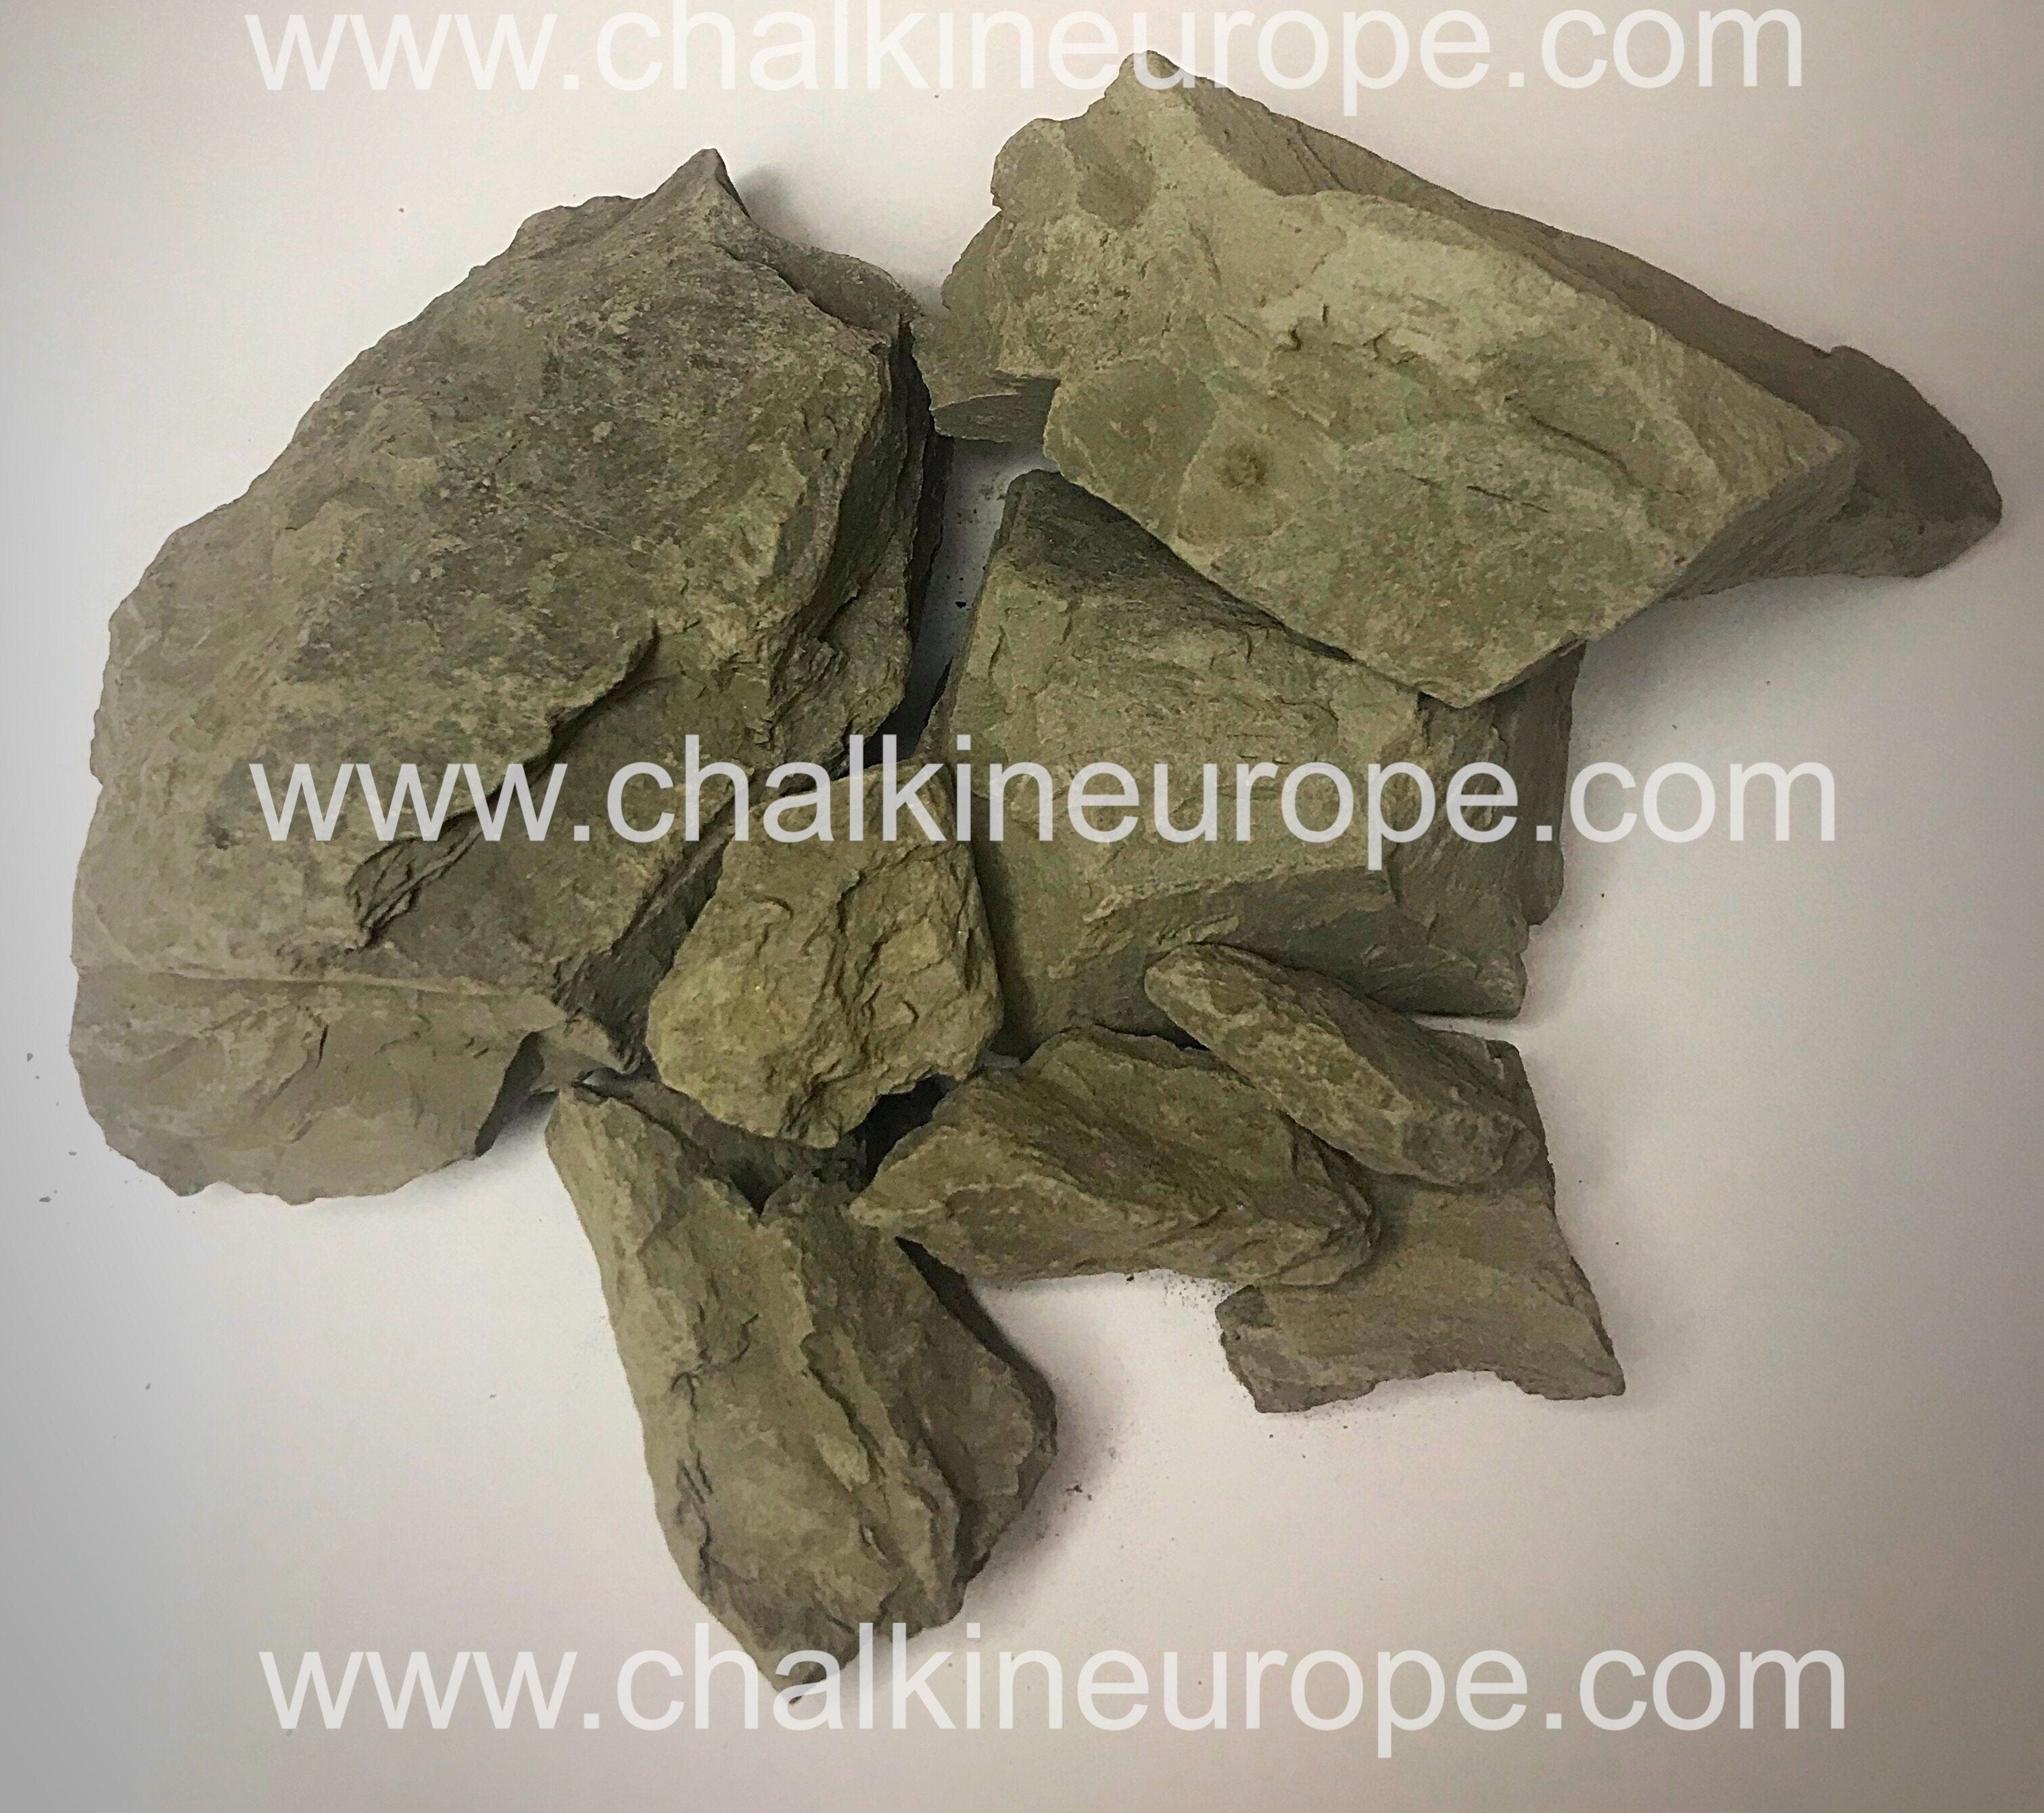 Argile noire - Chalkineurope